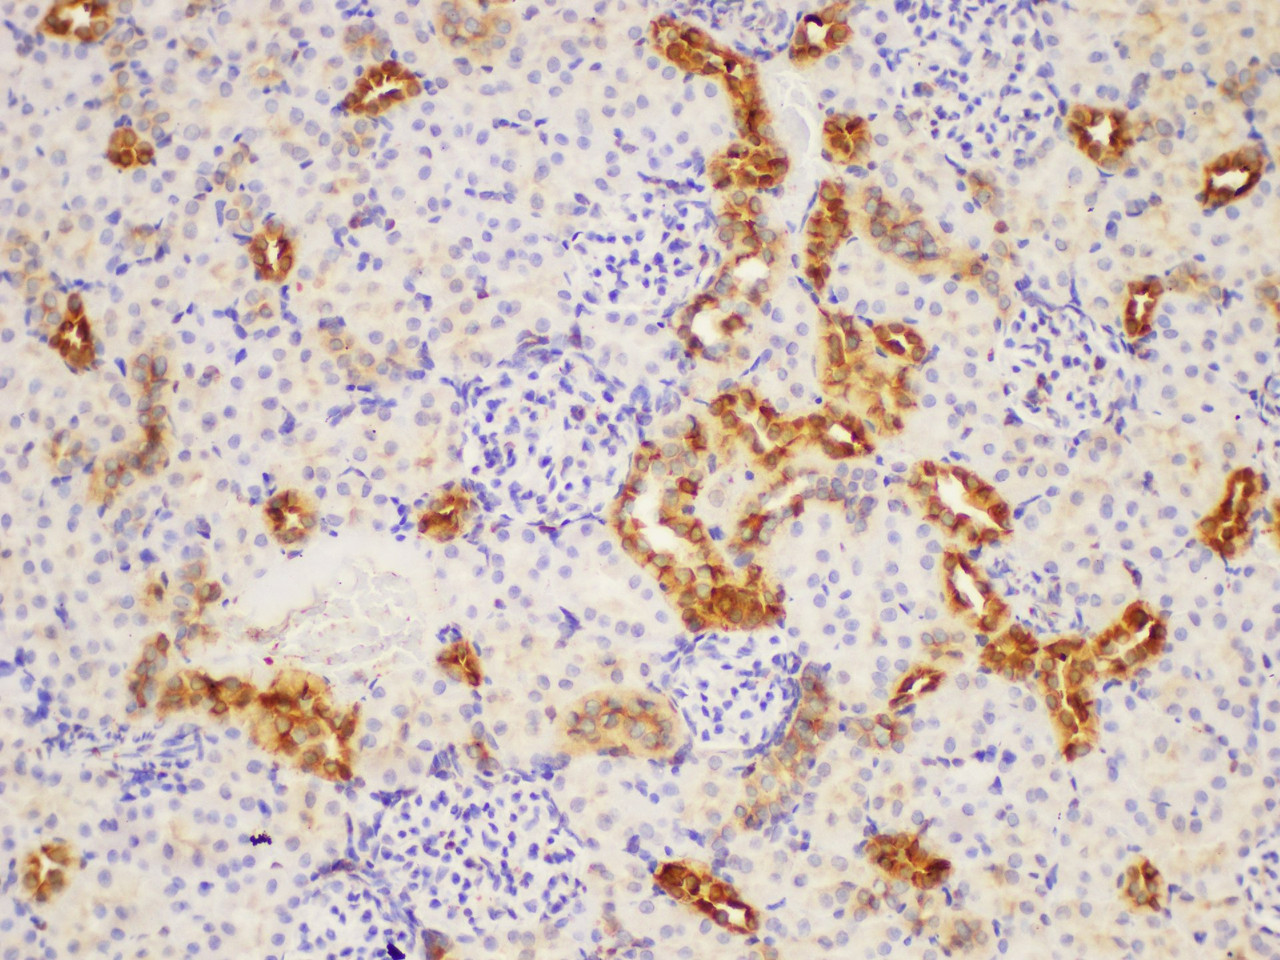 https://file.elabscience.com//image/antibody/EA/E-AB-40363-IHC03.jpg